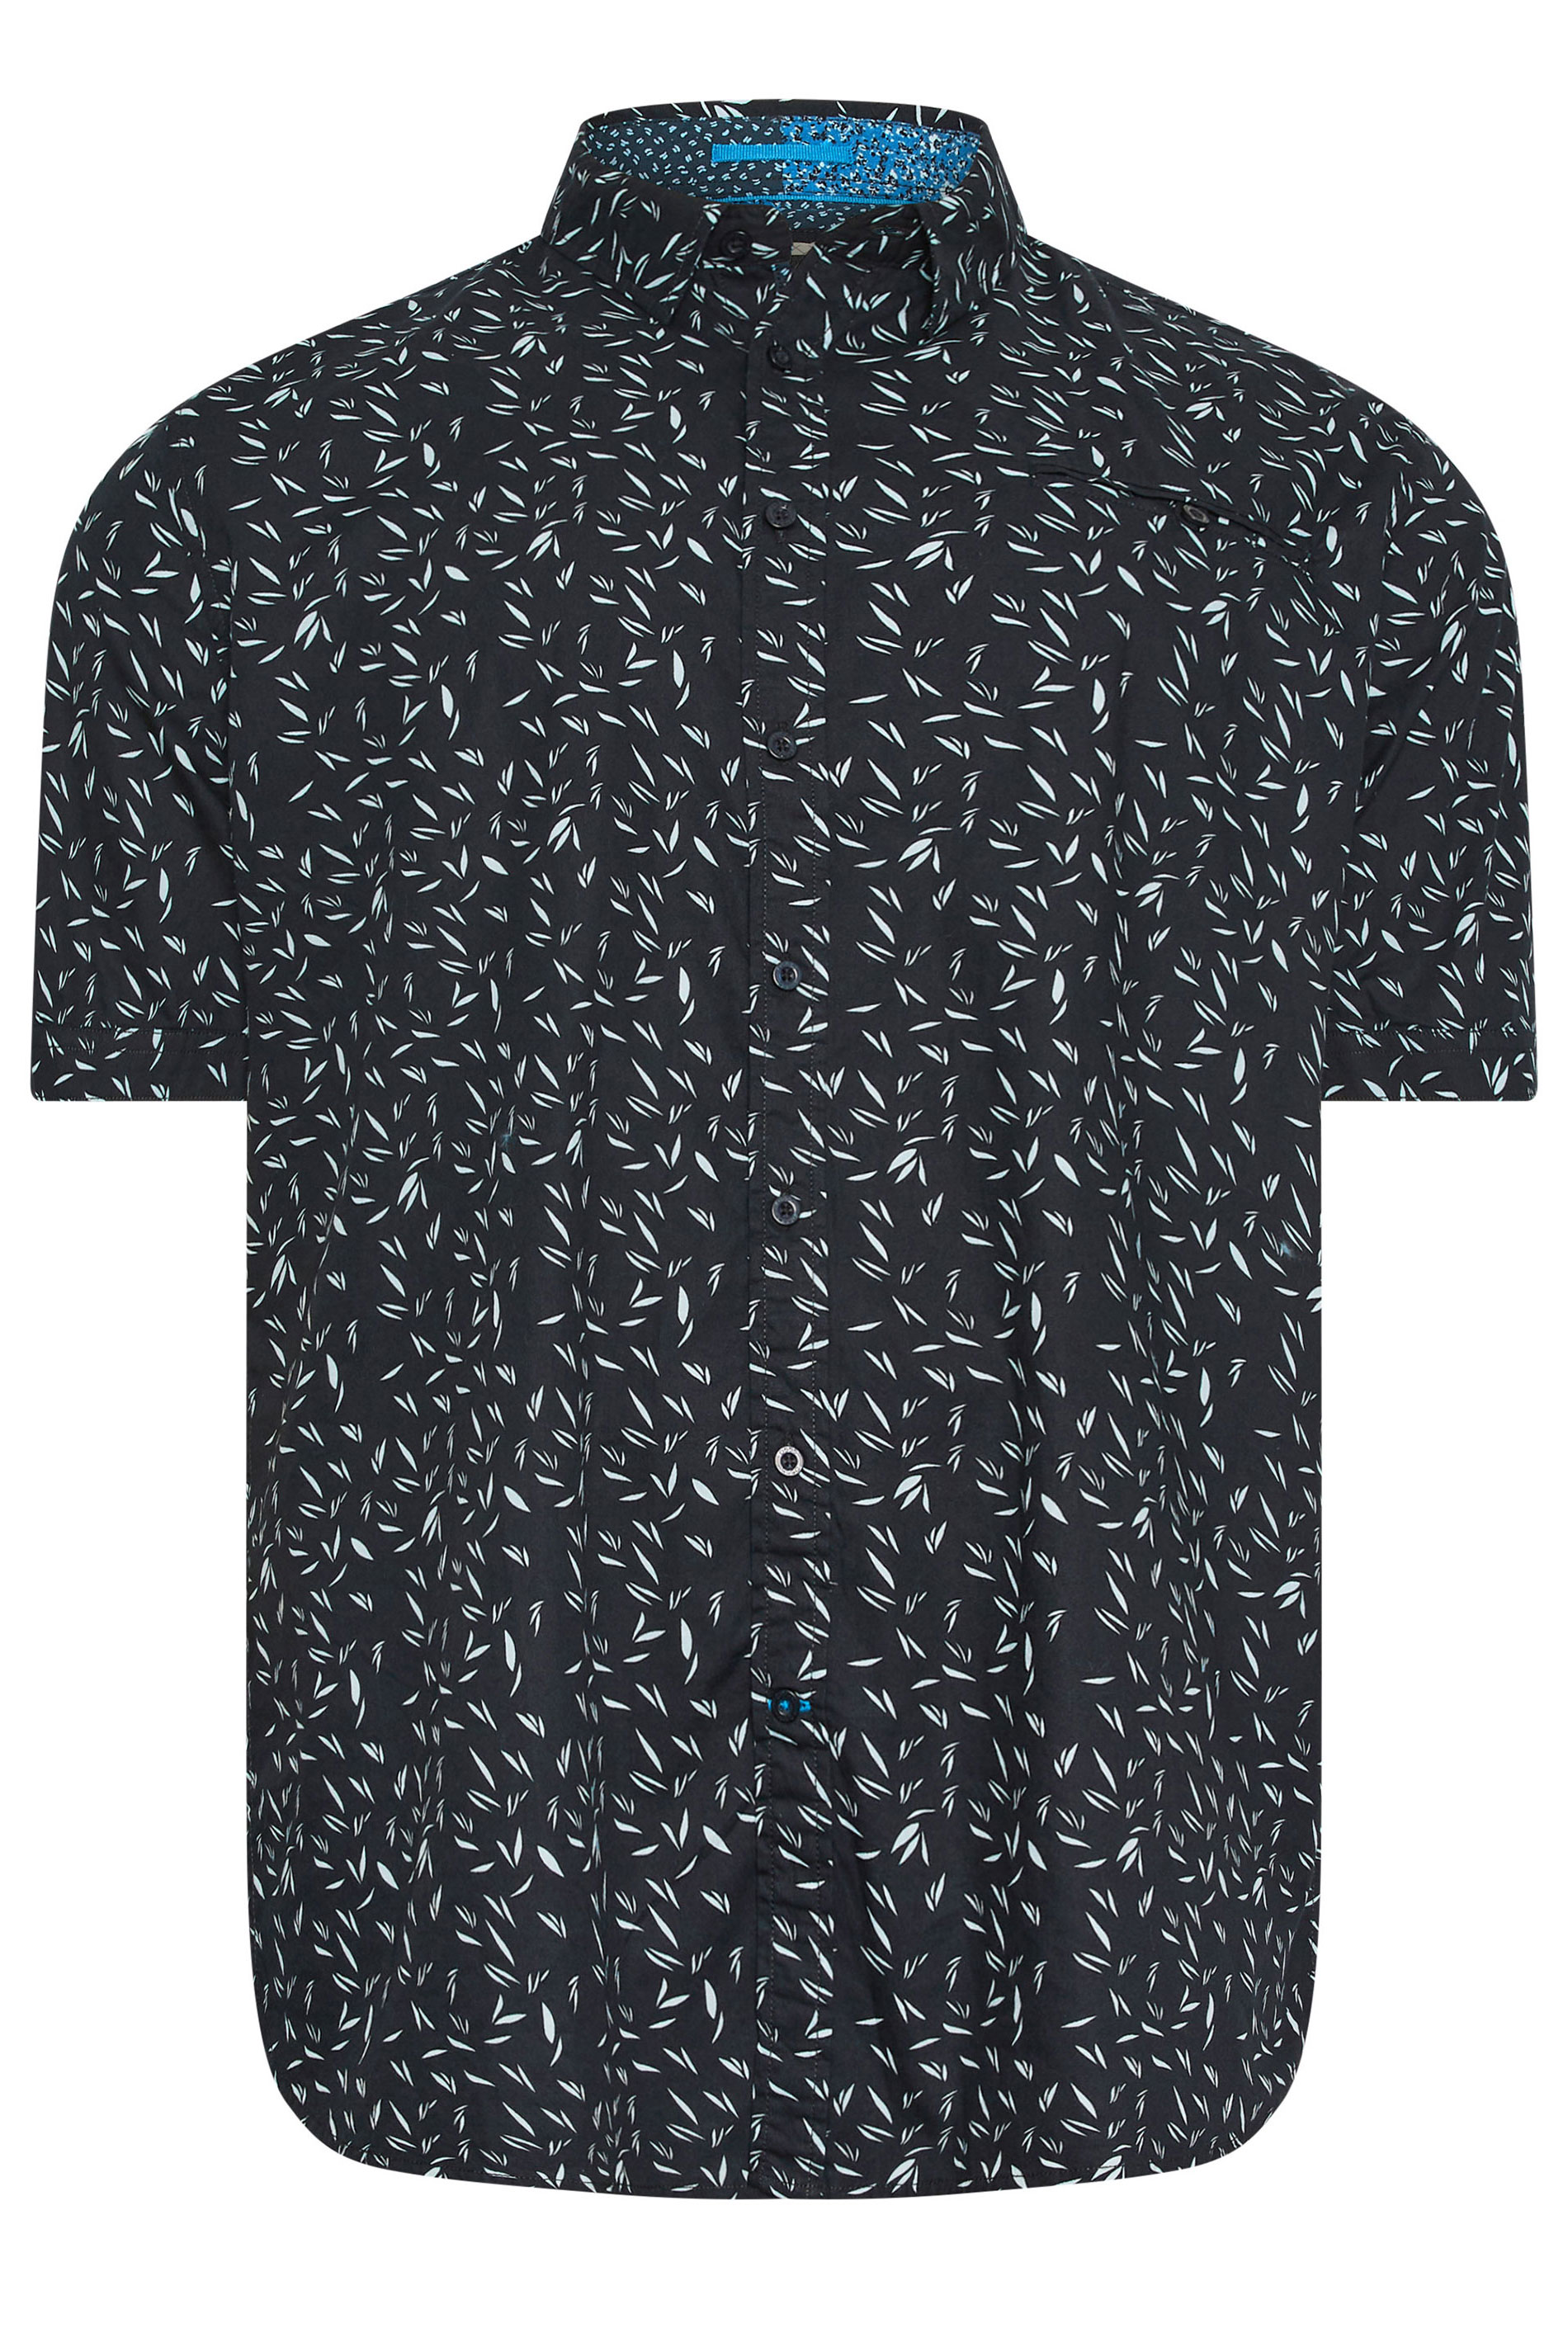 D555 Big & Tall Dark Navy Blue Leaf Print Short Sleeve Shirt | BadRhino 3